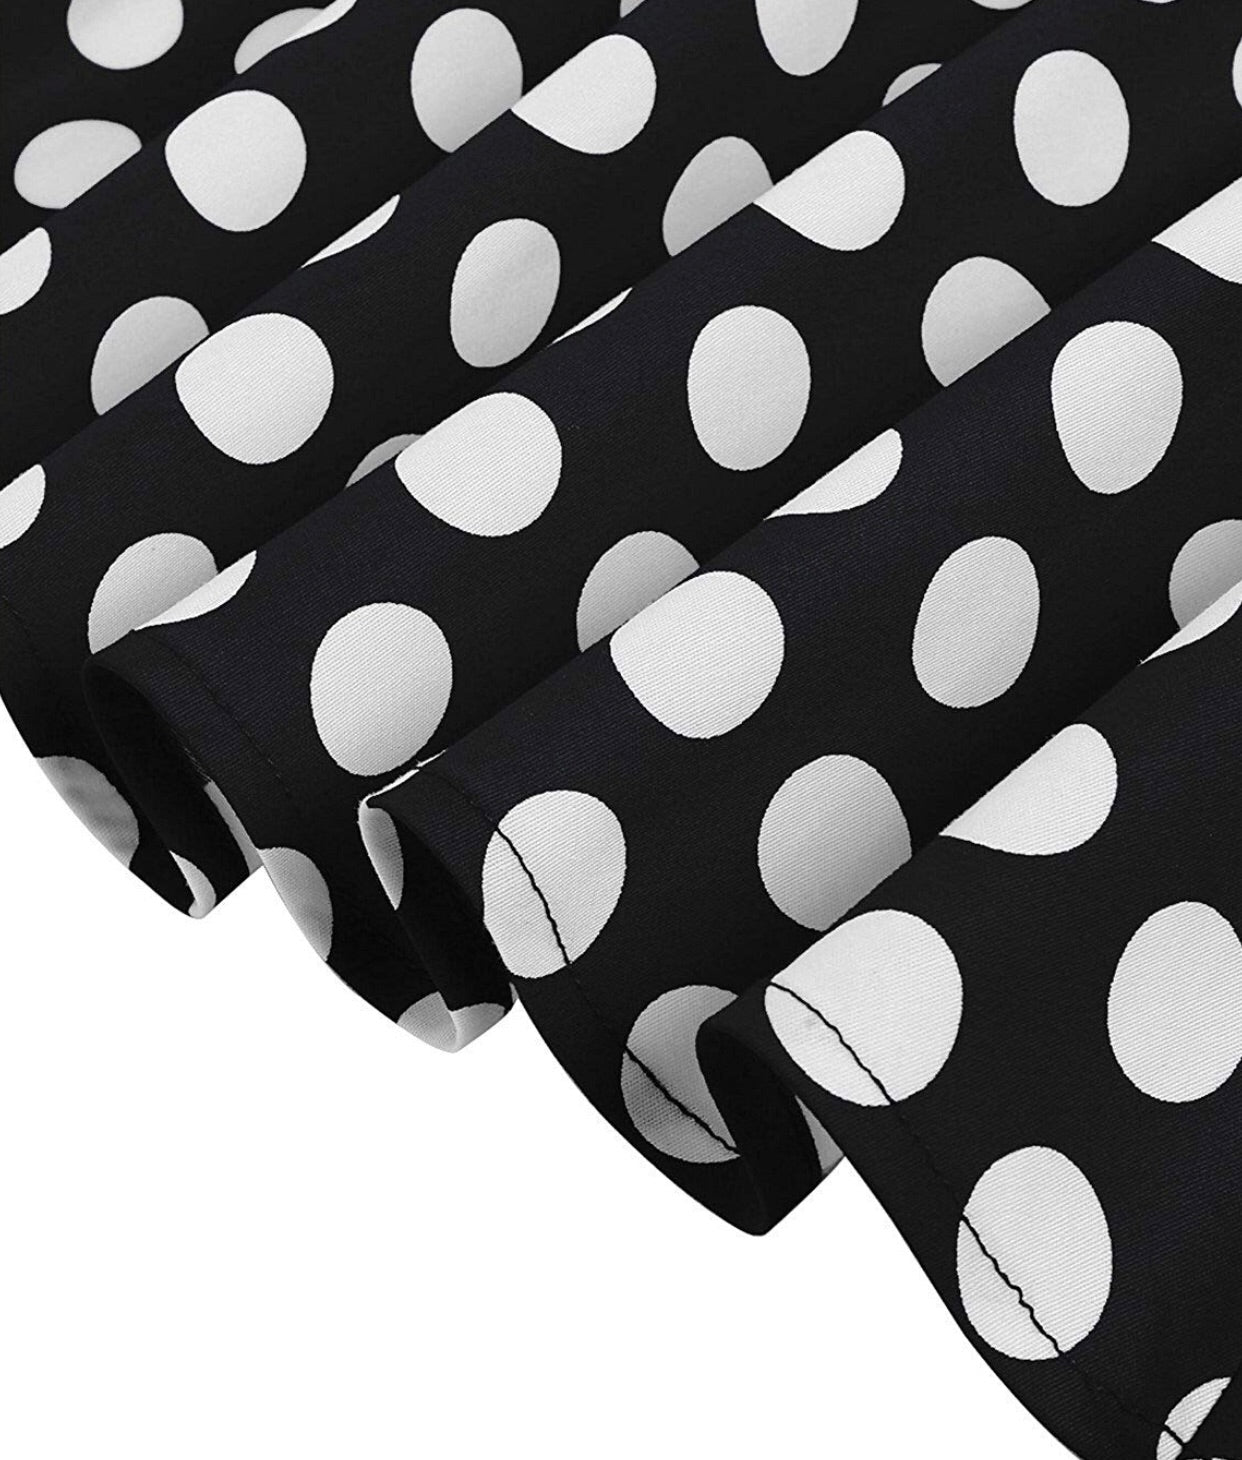 Rockability Cap-Sleeve Dress, Black with White Polka Dots, Sizes XS - 3XL